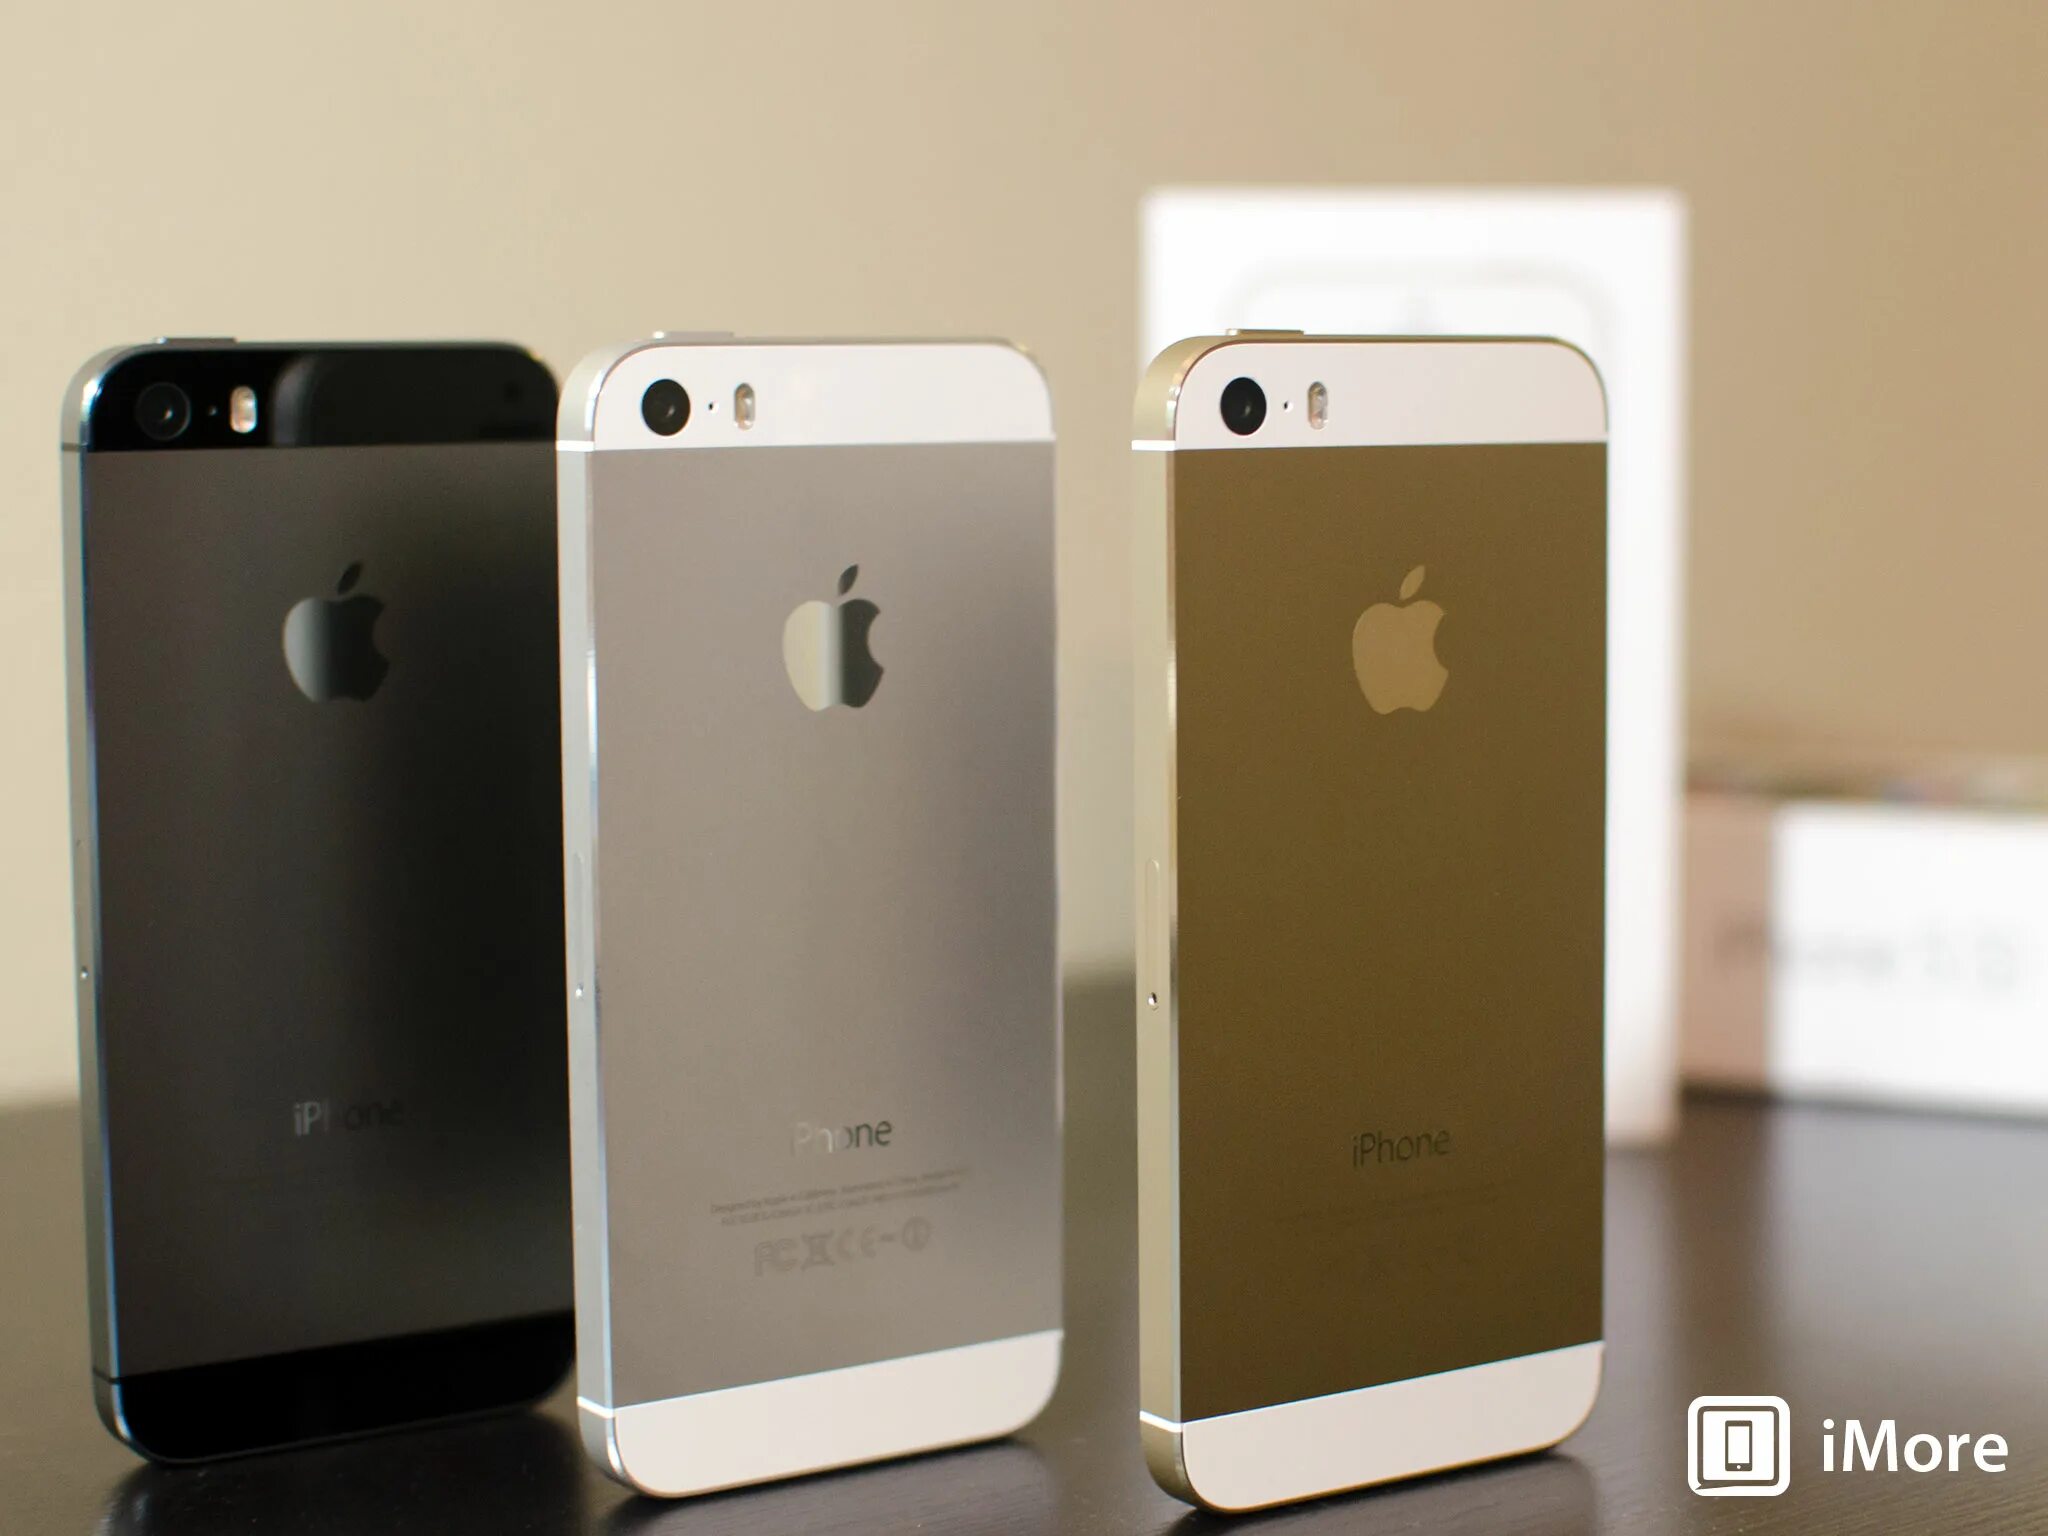 Iphone 5s. Iphone 5 Silver. Iphone 5s Gold. Iphone 5s Space Gray.